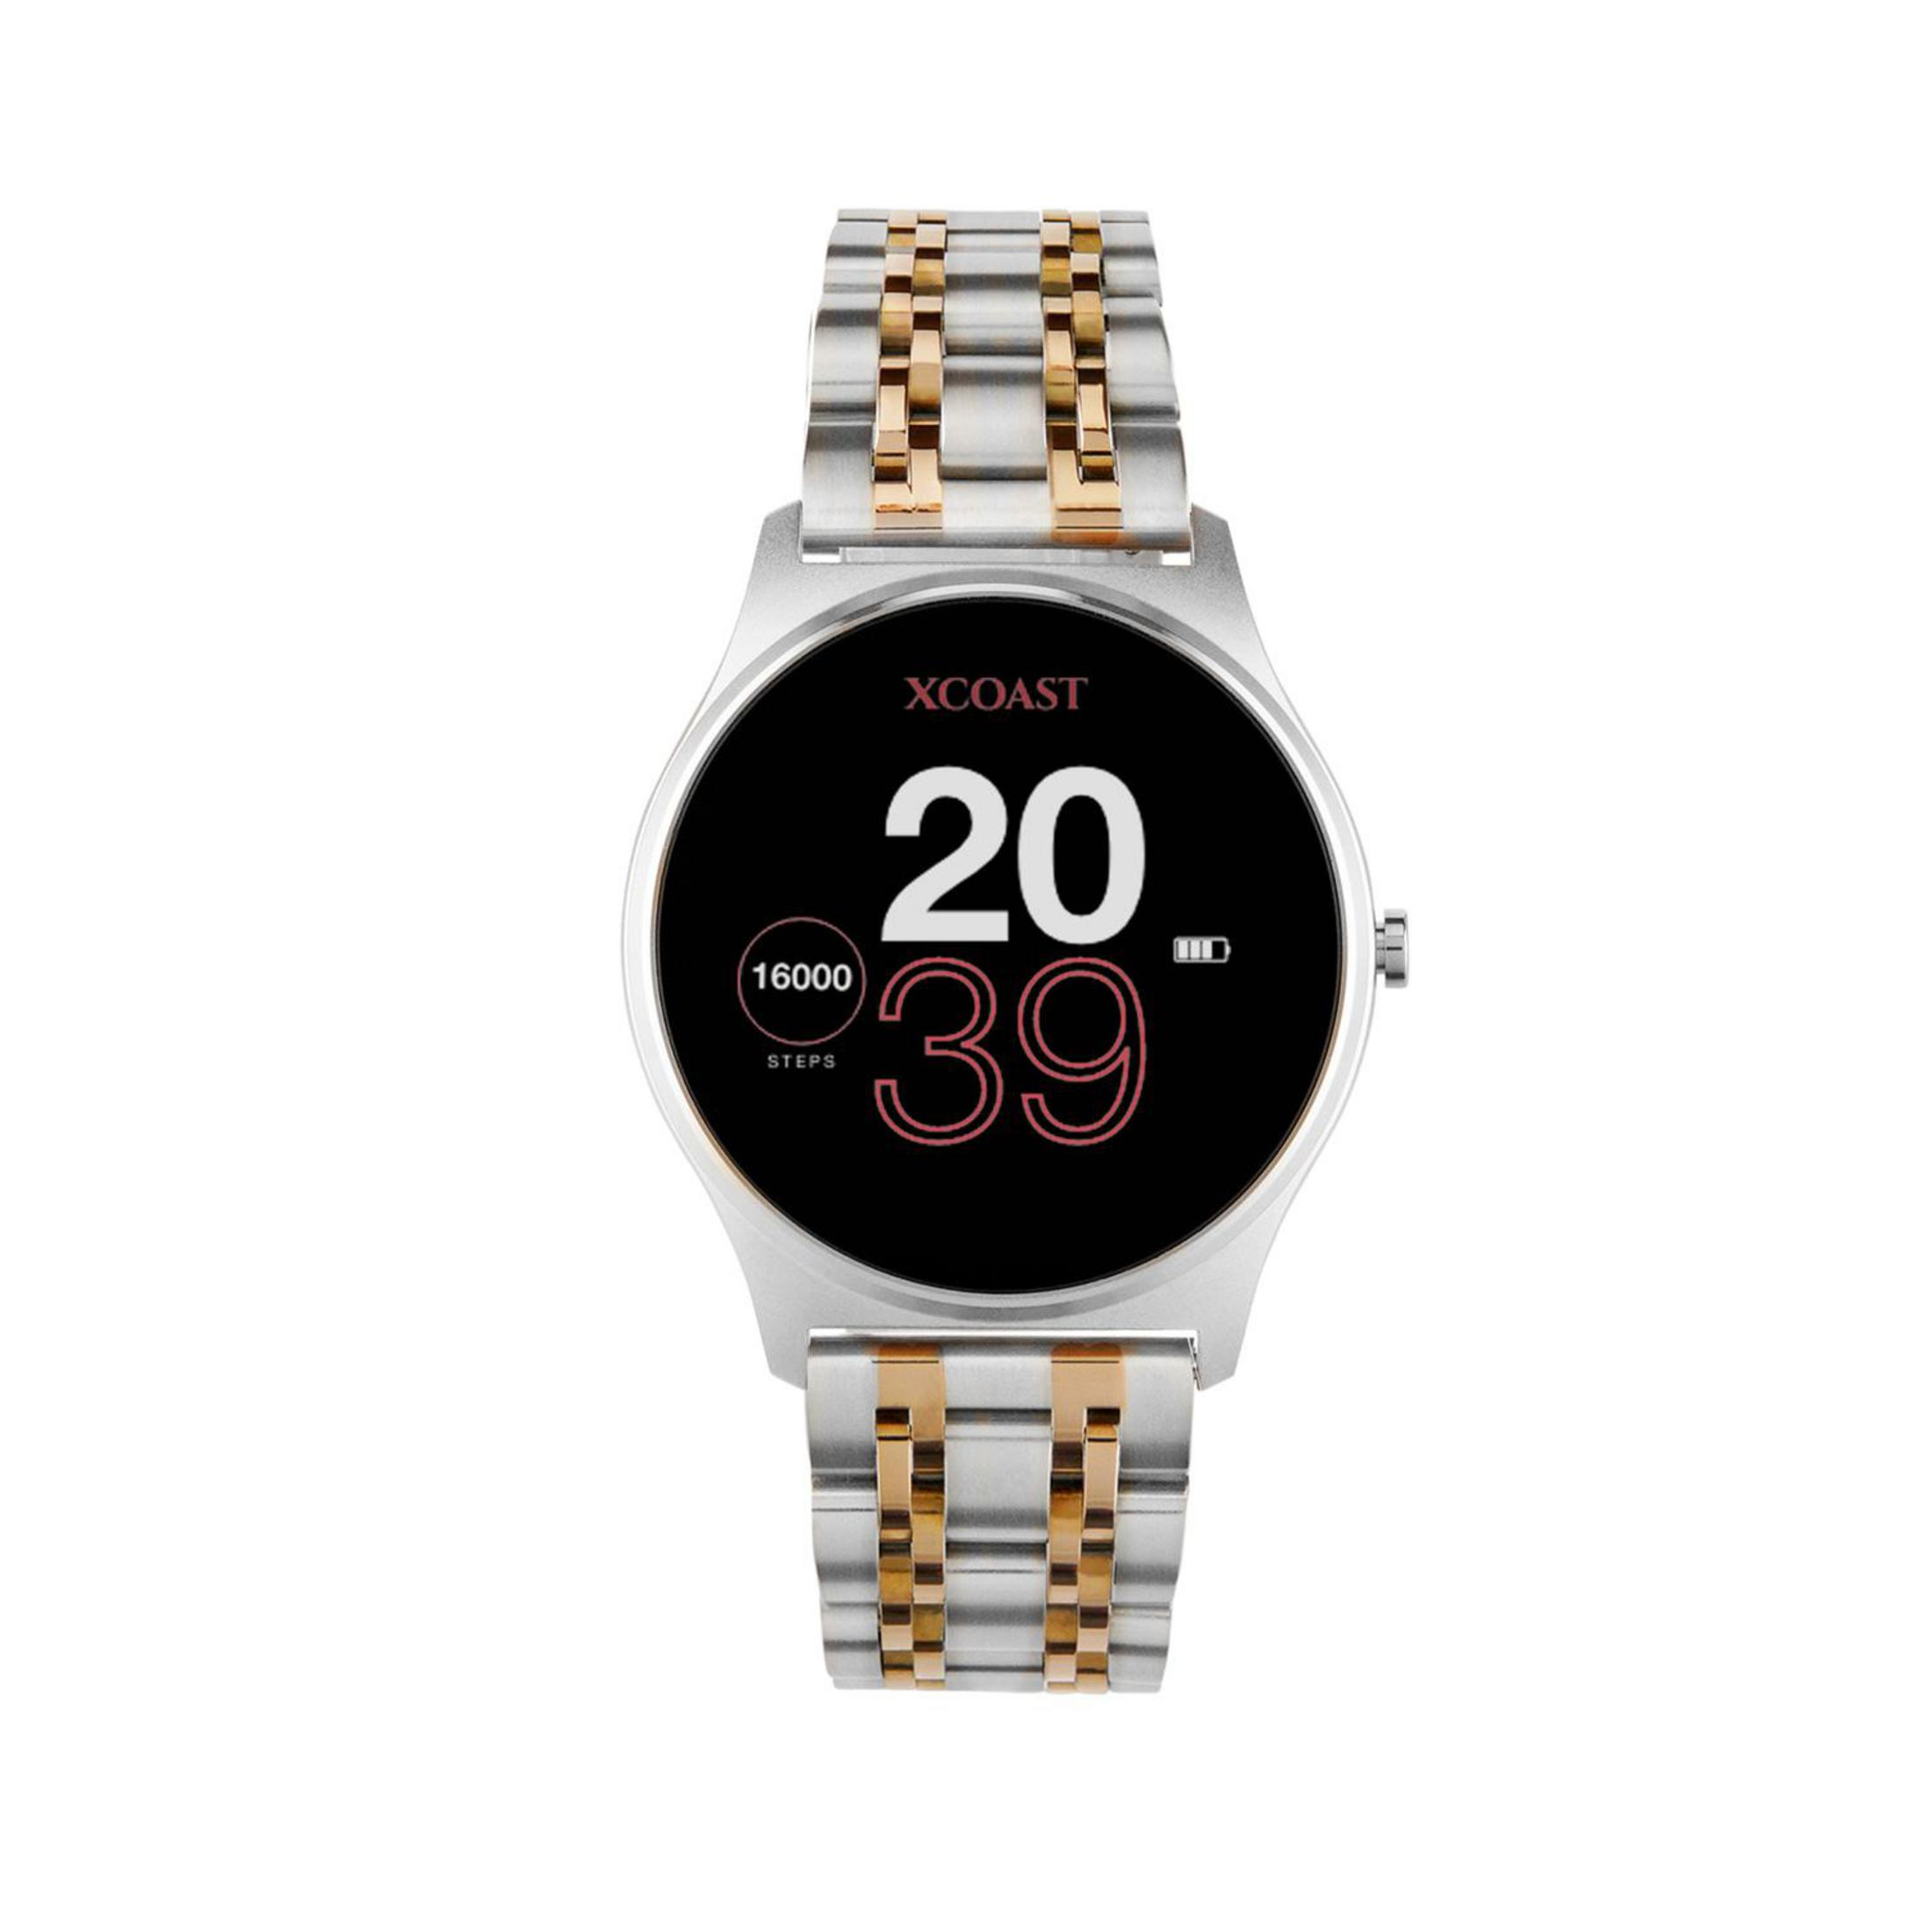 X-WATCH 54059 JOLI SHINY Smartwatch mm, Silber/Gold Metall, 265 SILVER XW PRO